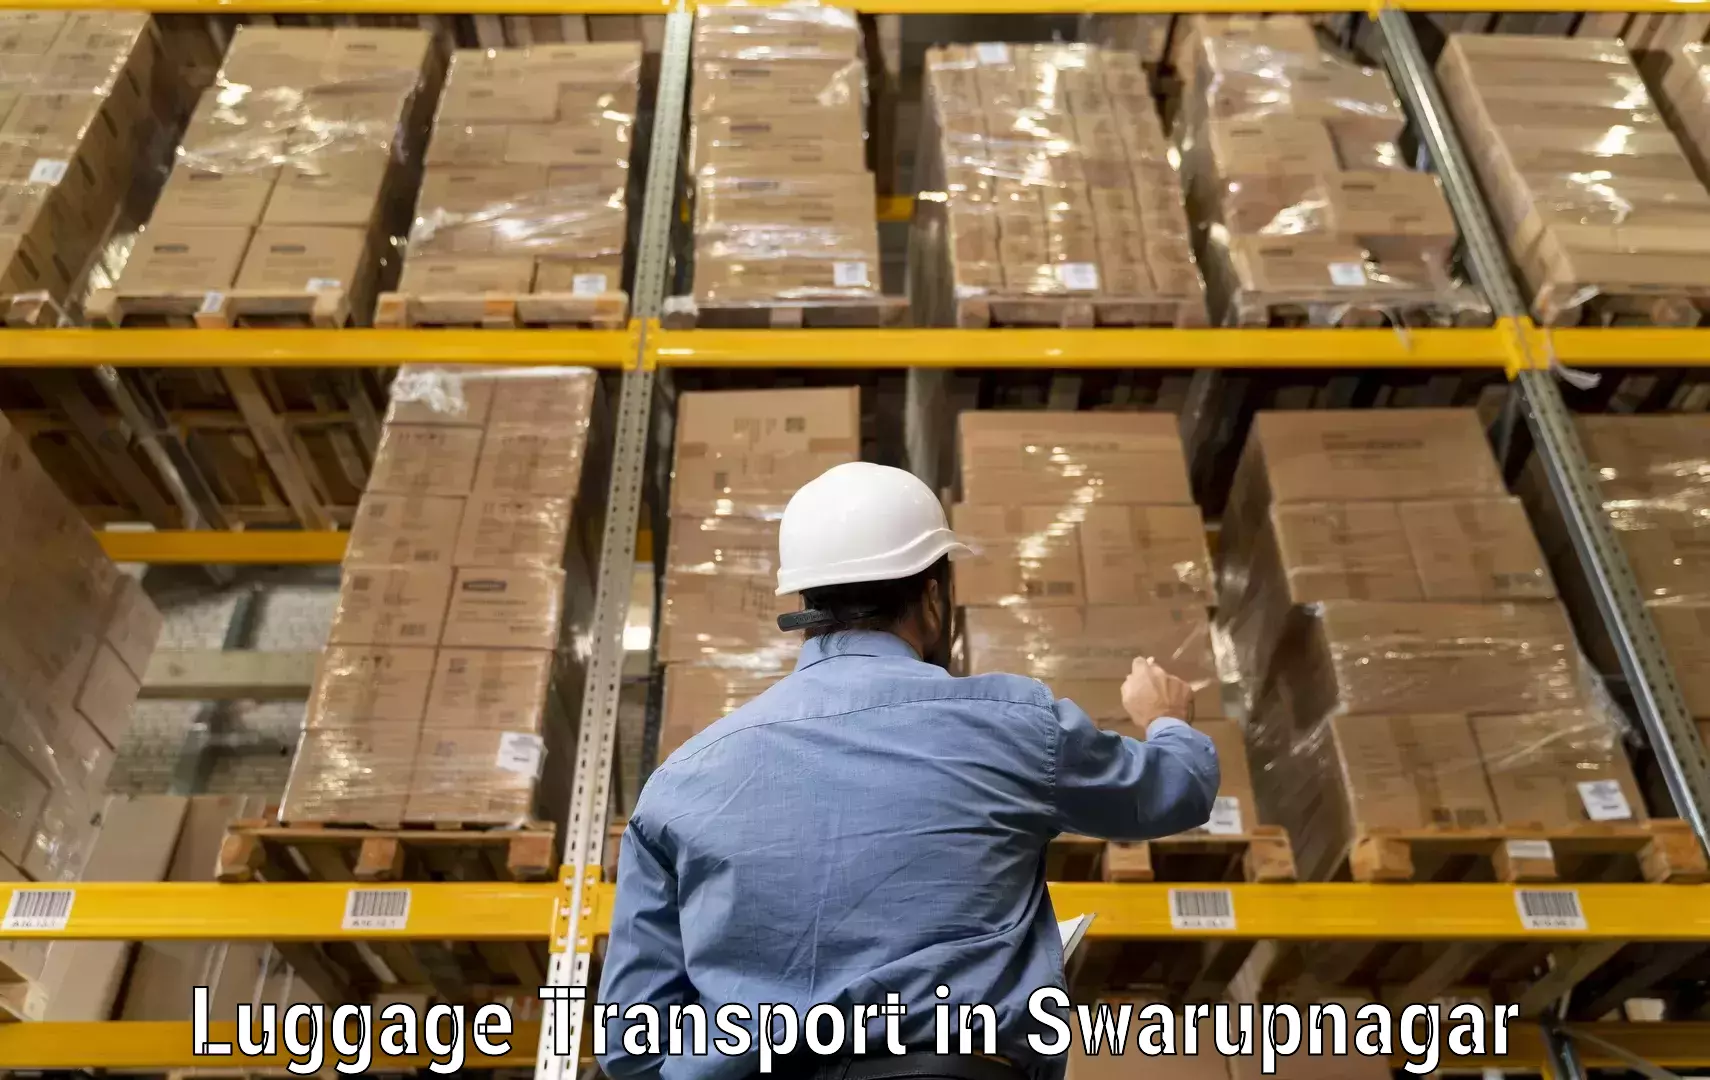 Baggage transport innovation in Swarupnagar